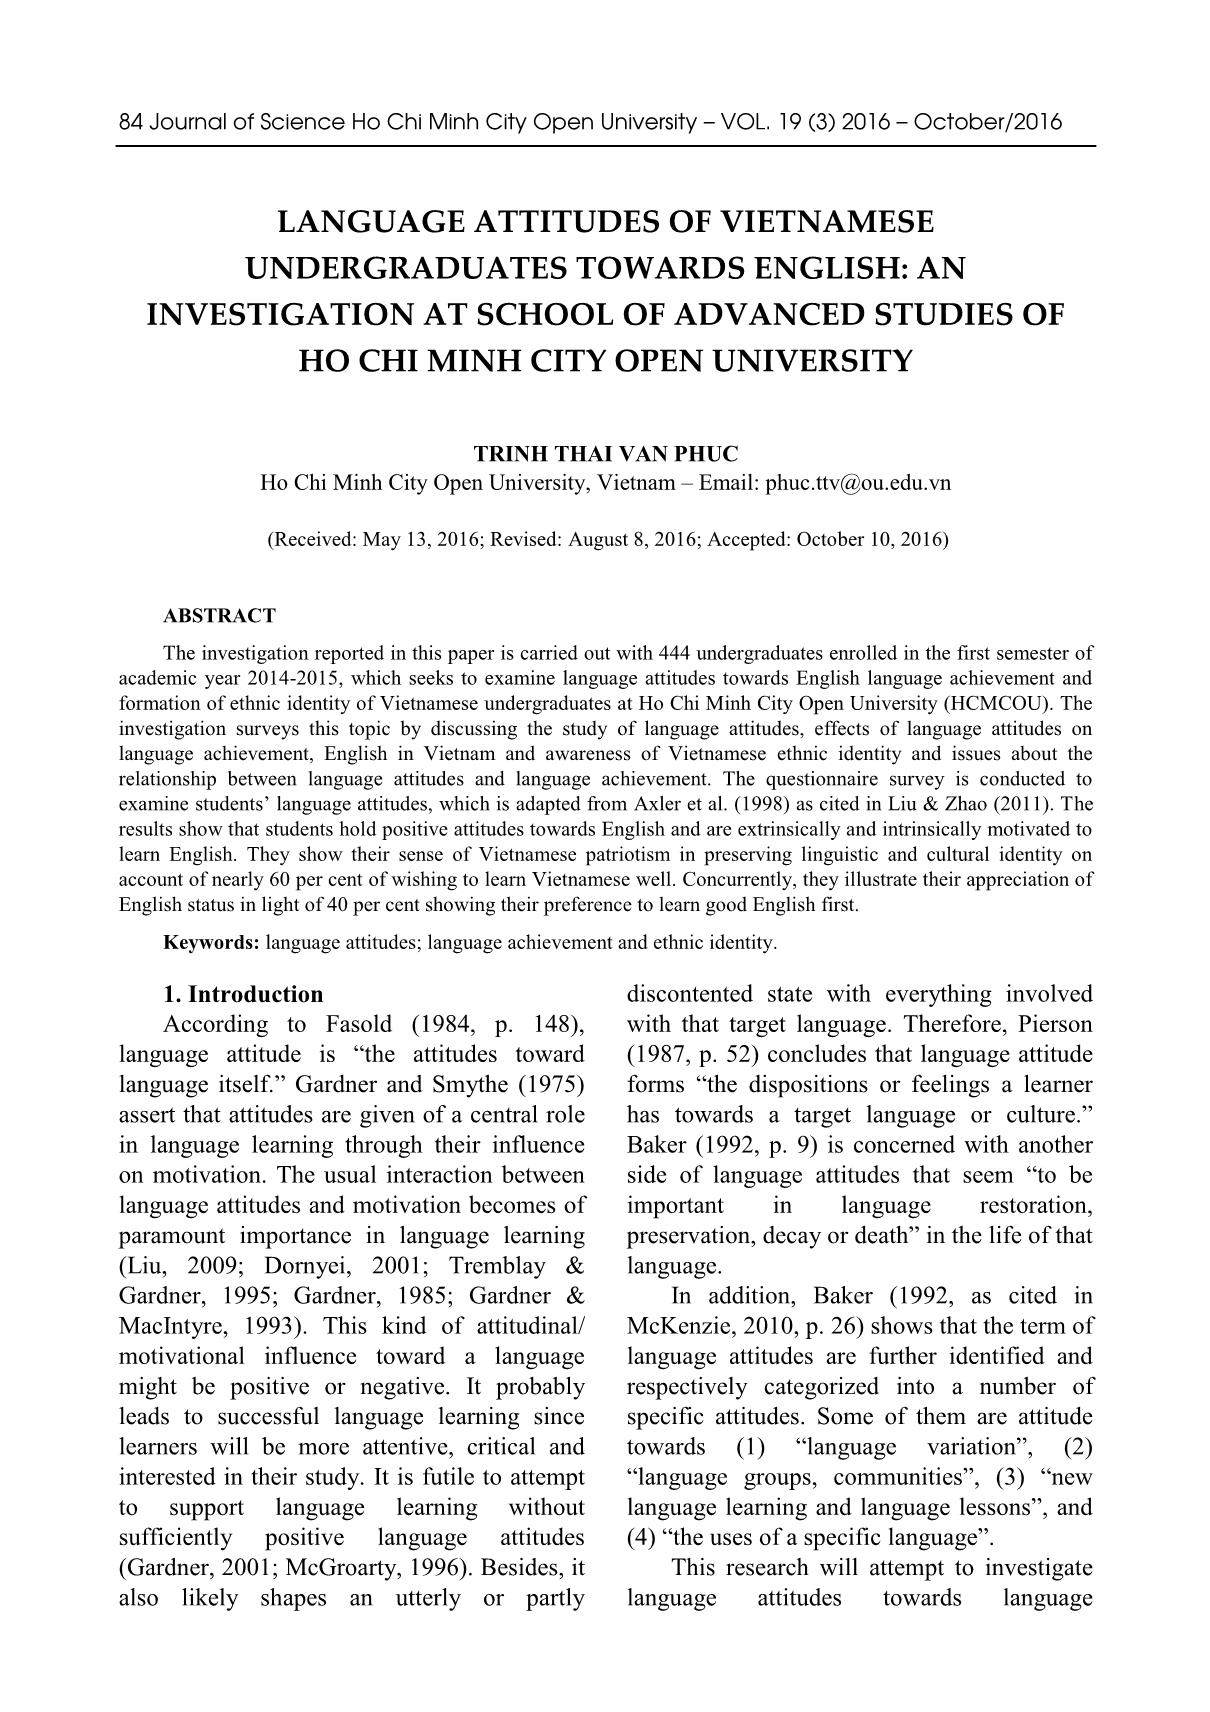 Language attitudes of Vietnamese undergraduates towards English: An investigation at school of advanced studies of Ho Chi Minh city open university trang 1